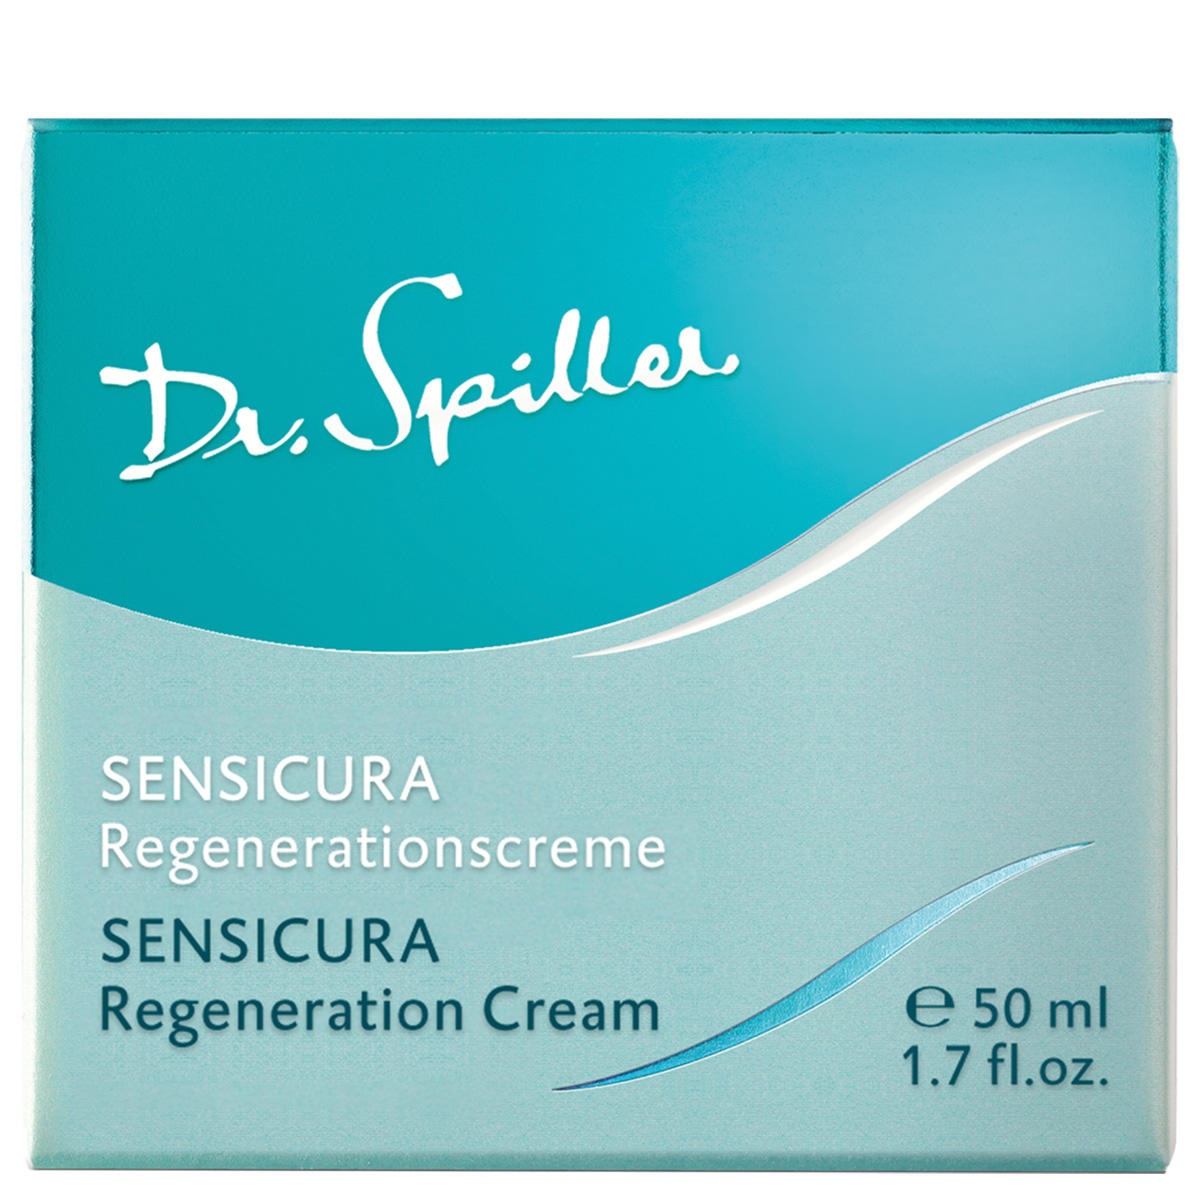 Dr. Spiller Biomimetic SkinCare SENSICURA Regenerationscreme 50 ml - 3